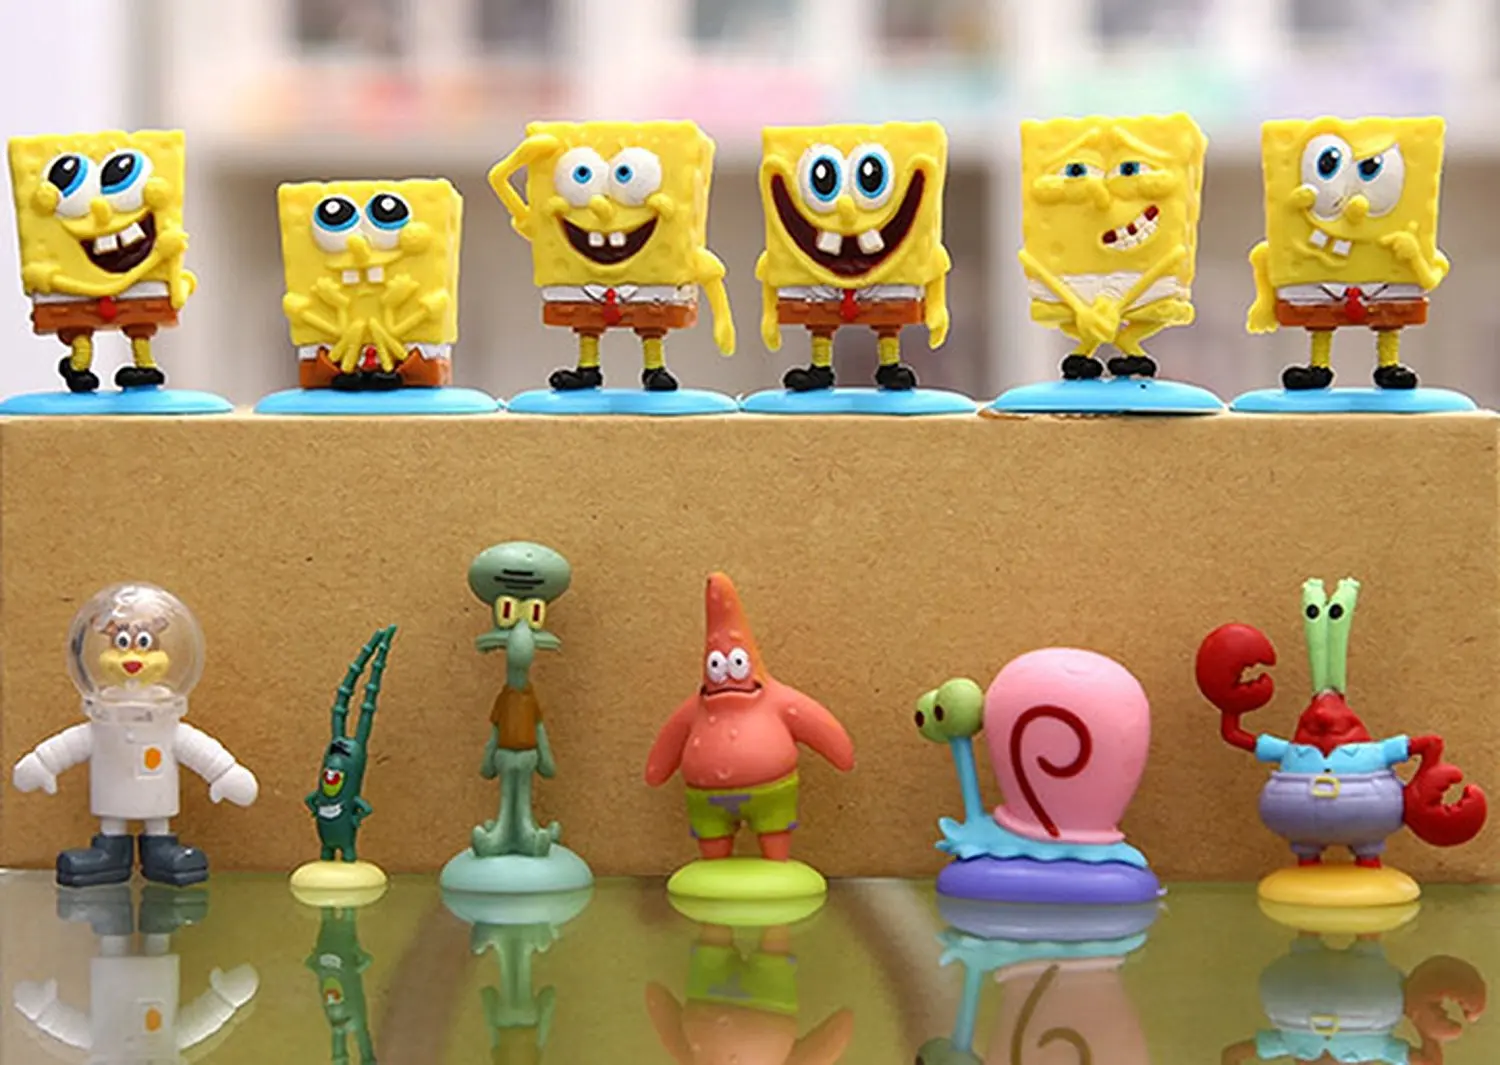 Киндер губка боб. Игрушки губка Боб и Патрик и Сквидвард. Spongebob Squarepants игрушки. Губка Боб Сквидвард игрушка. Киндер игрушки губка Боб.